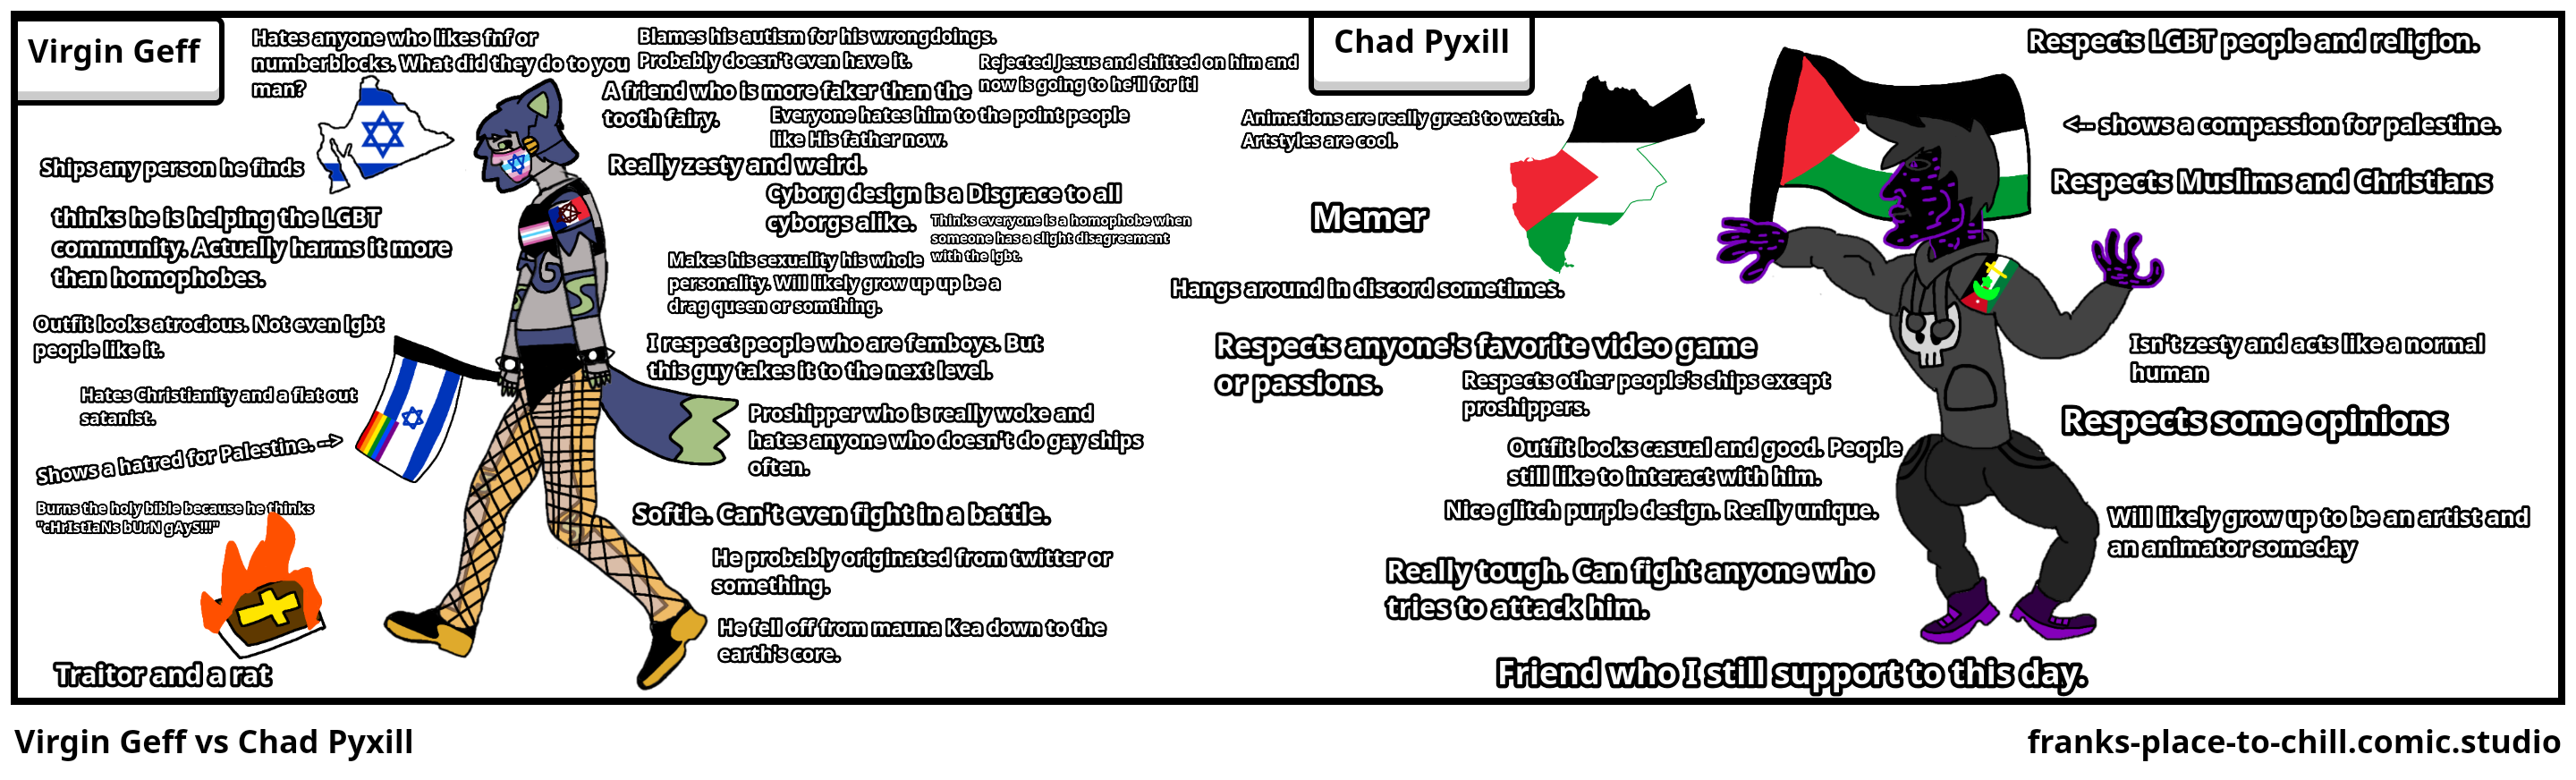 Virgin Geff vs Chad Pyxill